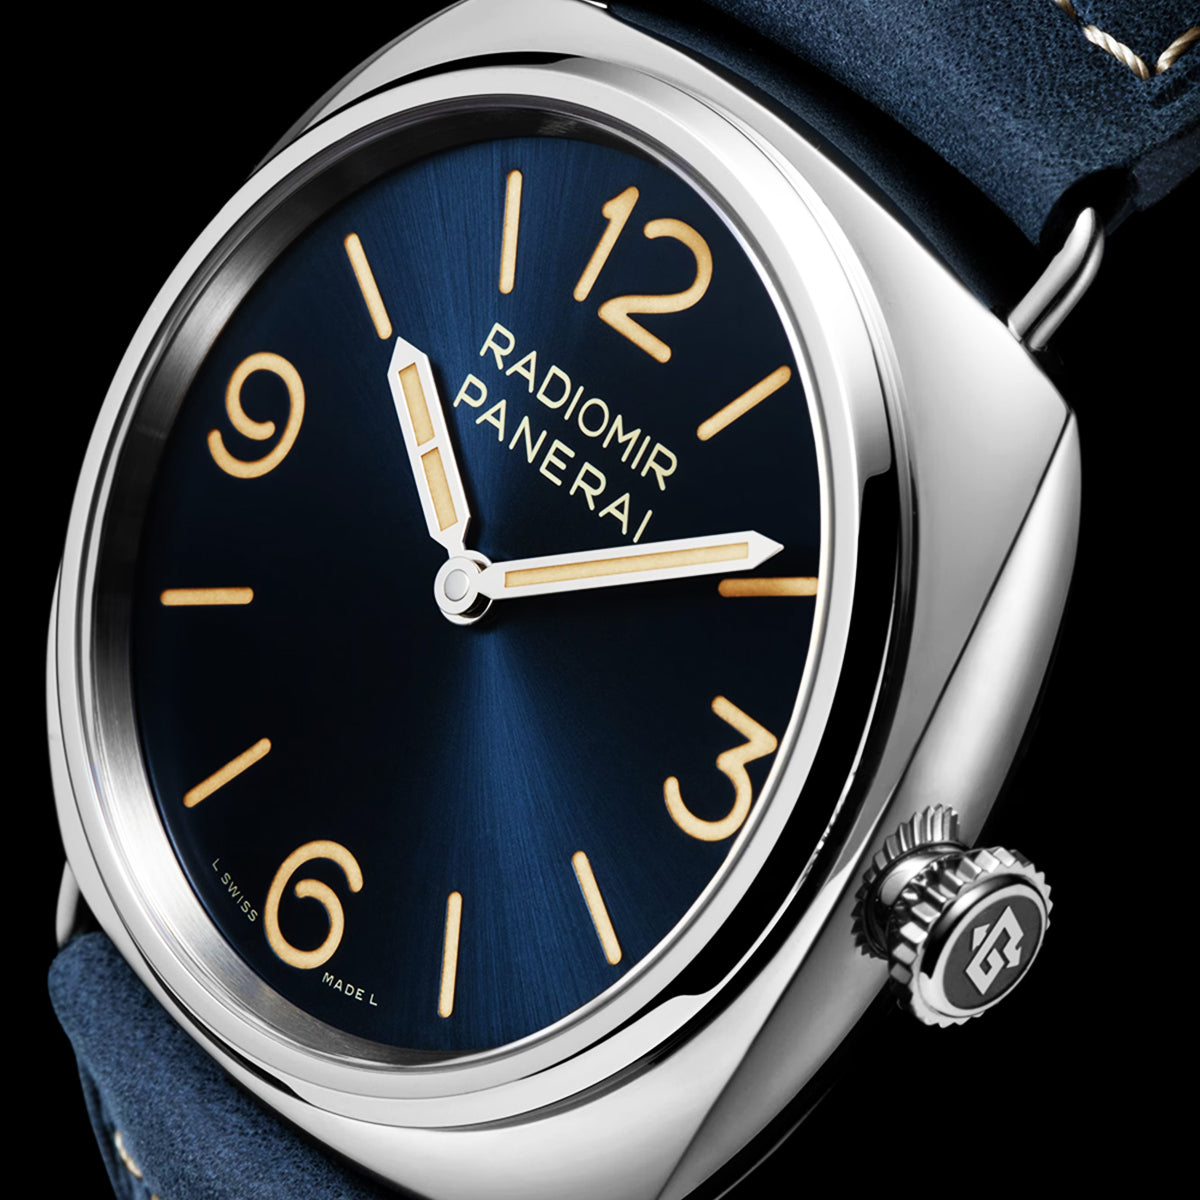 Radiomir Officine 45mm Blue Dial Manual-Wind Watch